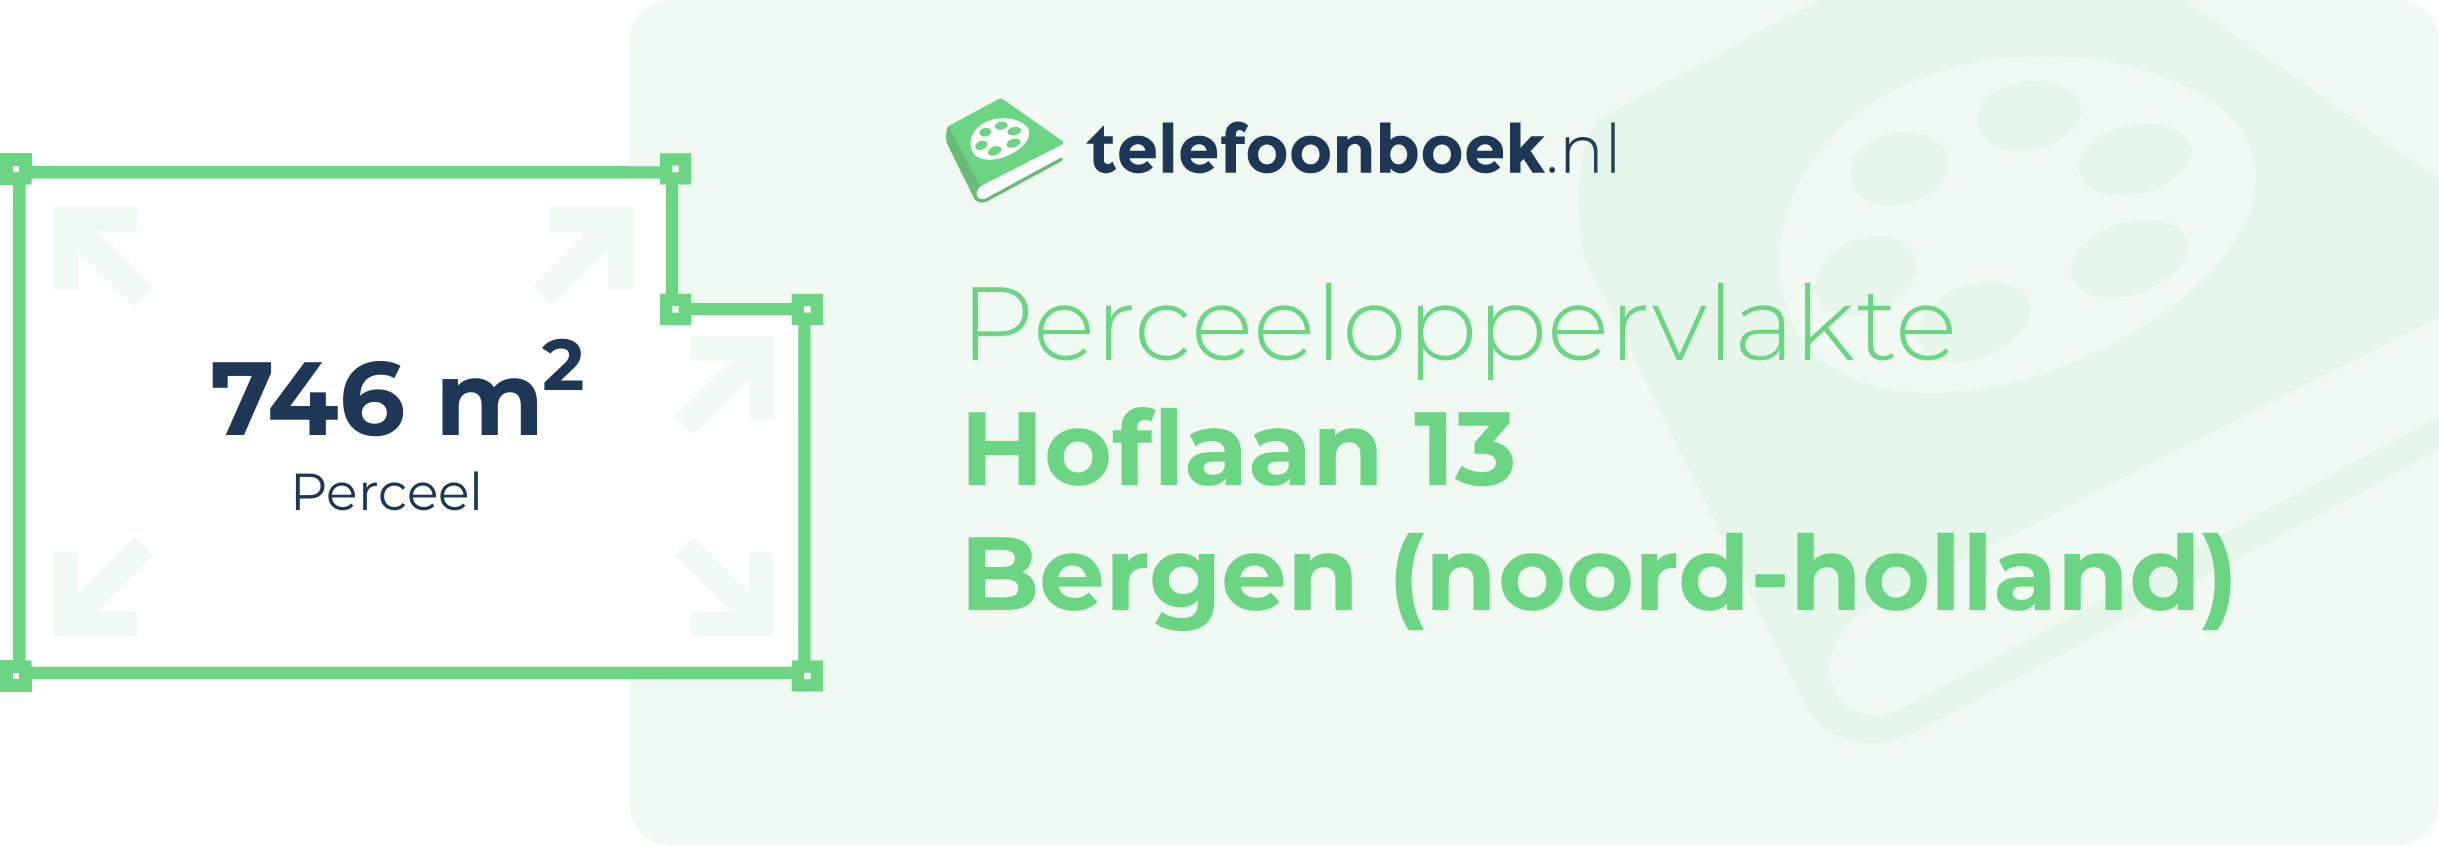 Perceeloppervlakte Hoflaan 13 Bergen (Noord-Holland)